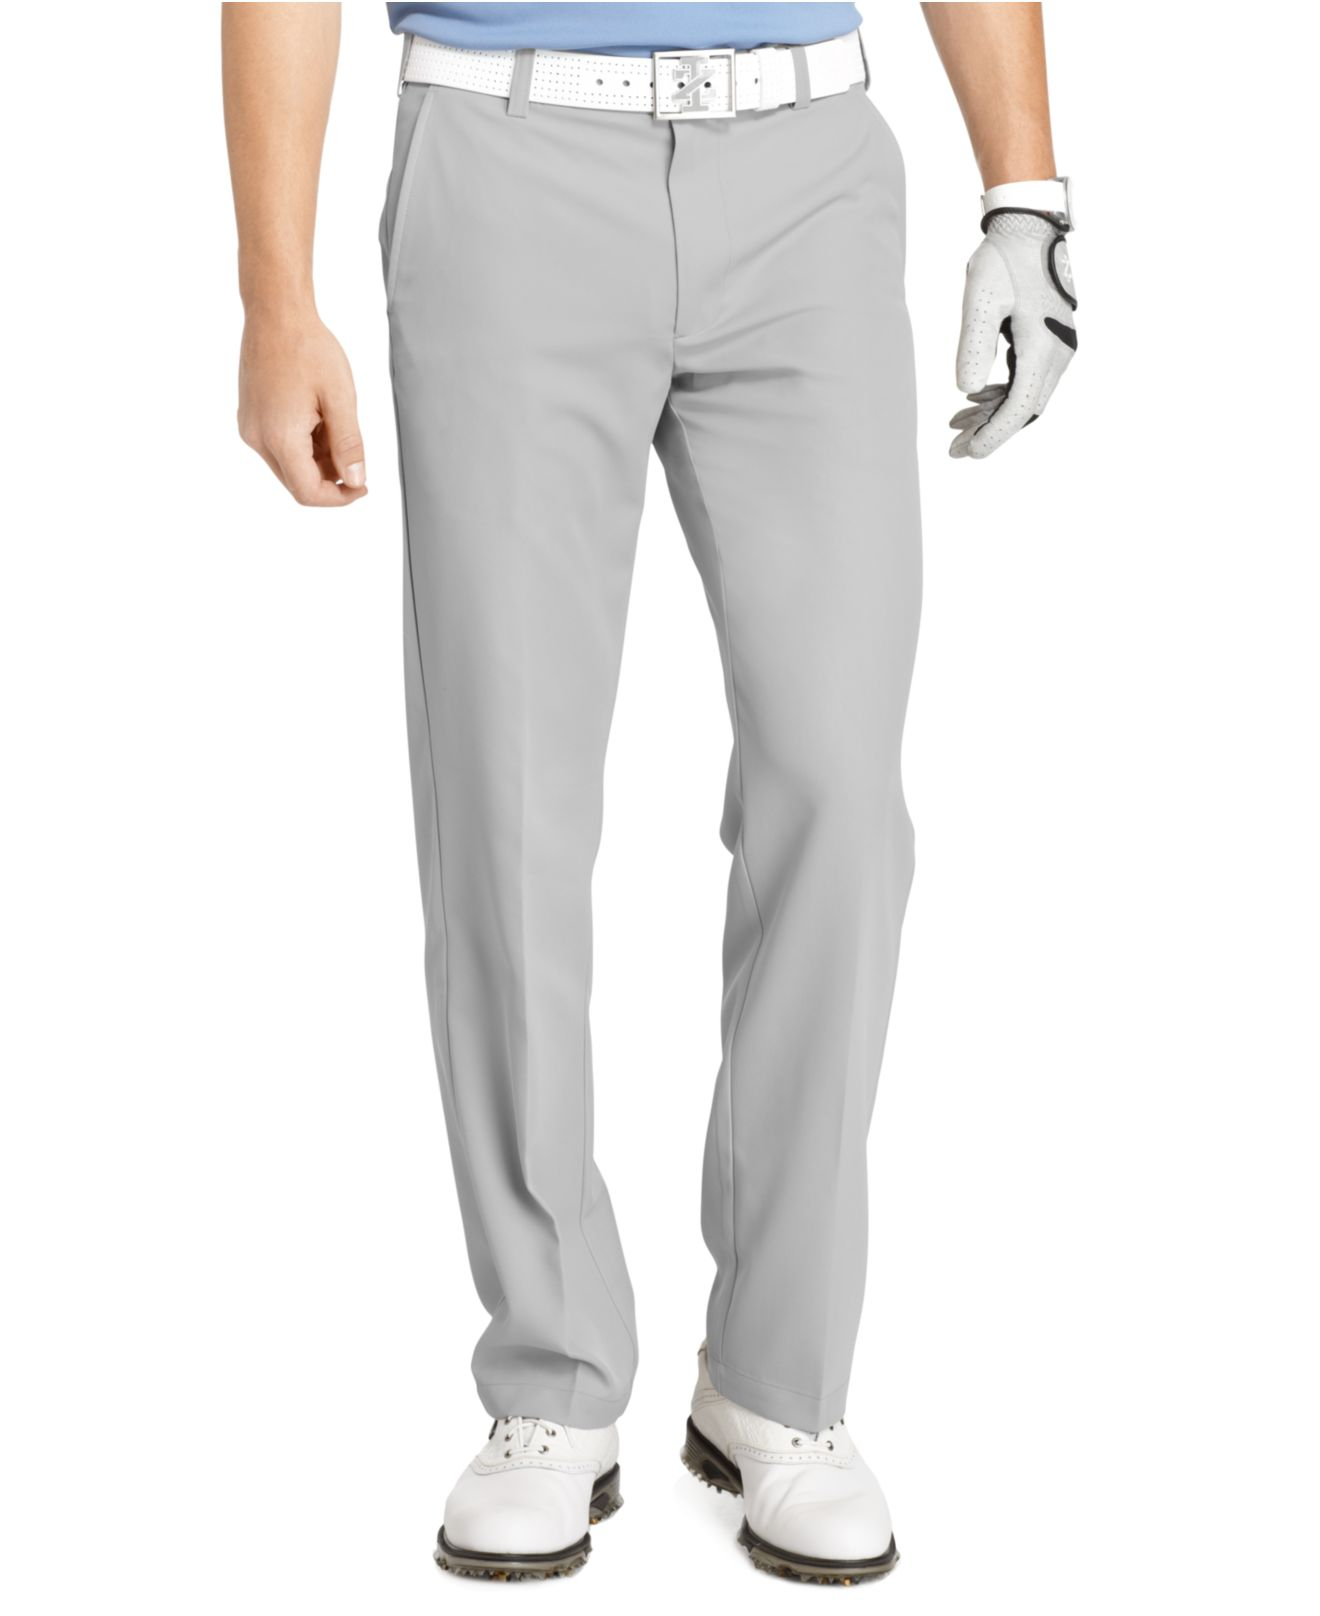 Izod Golf Pants, Slim-fit Flat Front Pants in Gray for Men - Lyst